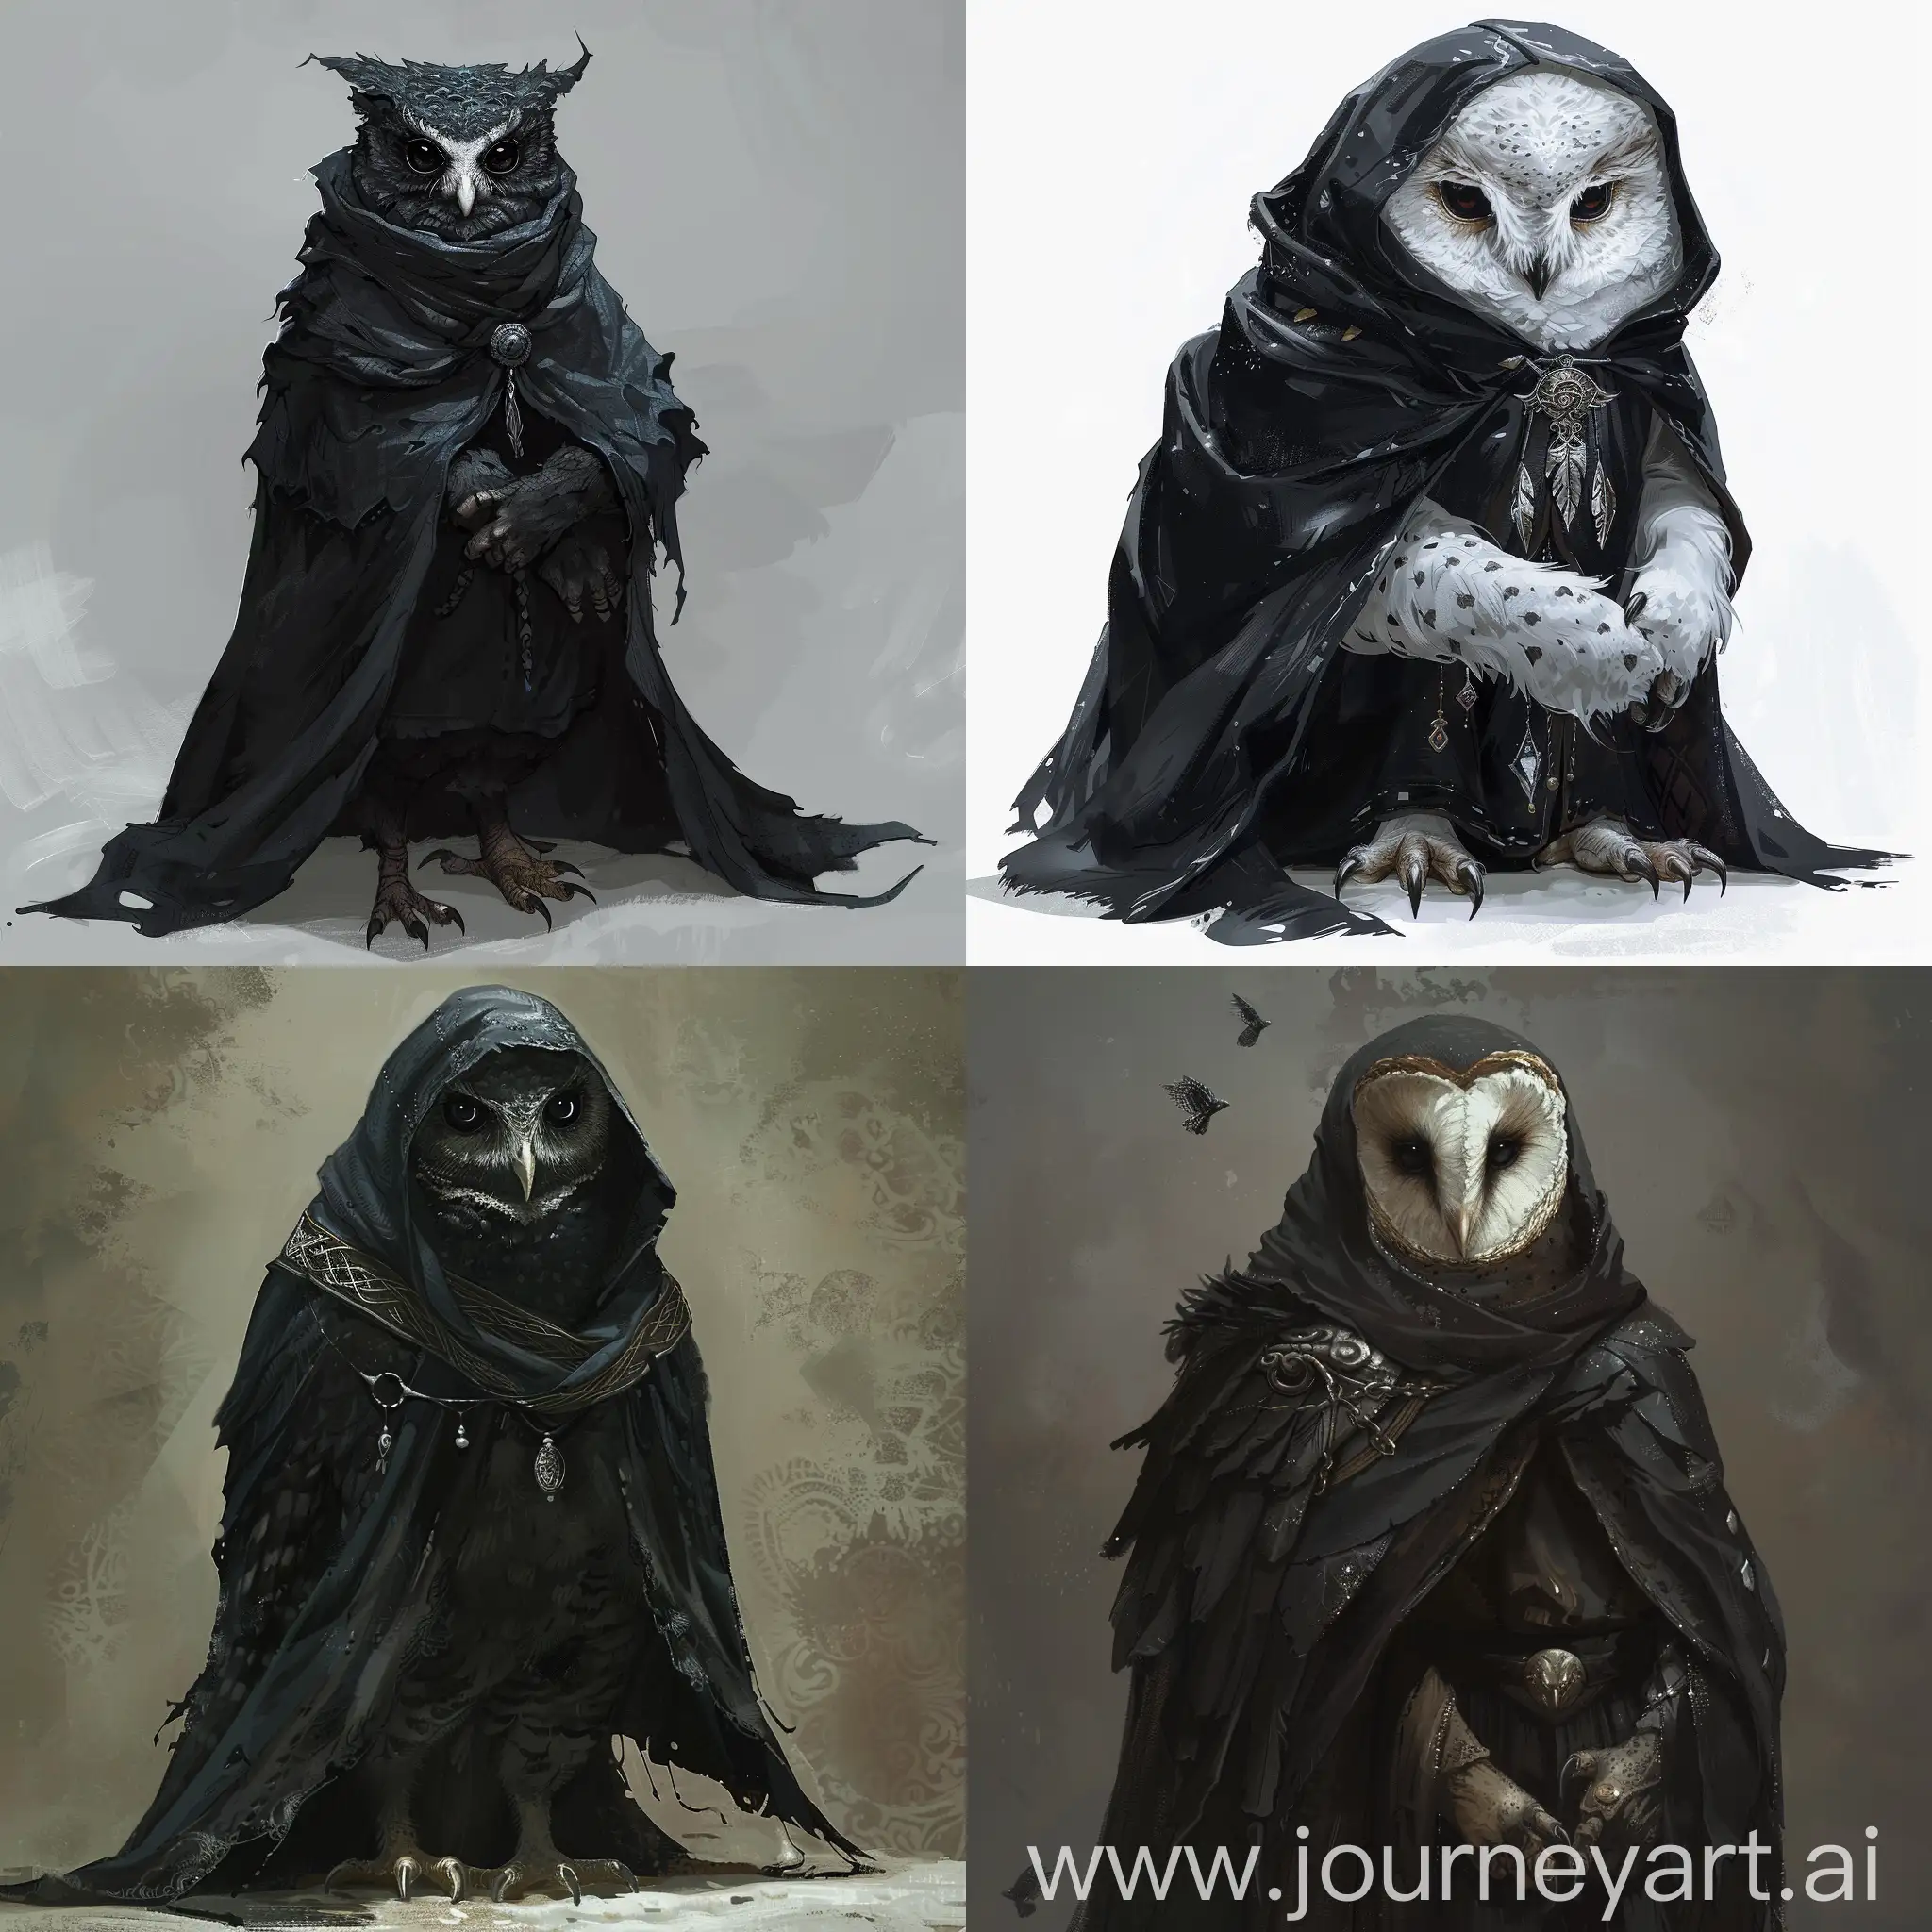 Gra-the-Urutau-Owl-in-Black-Cloak-with-Silver-Details